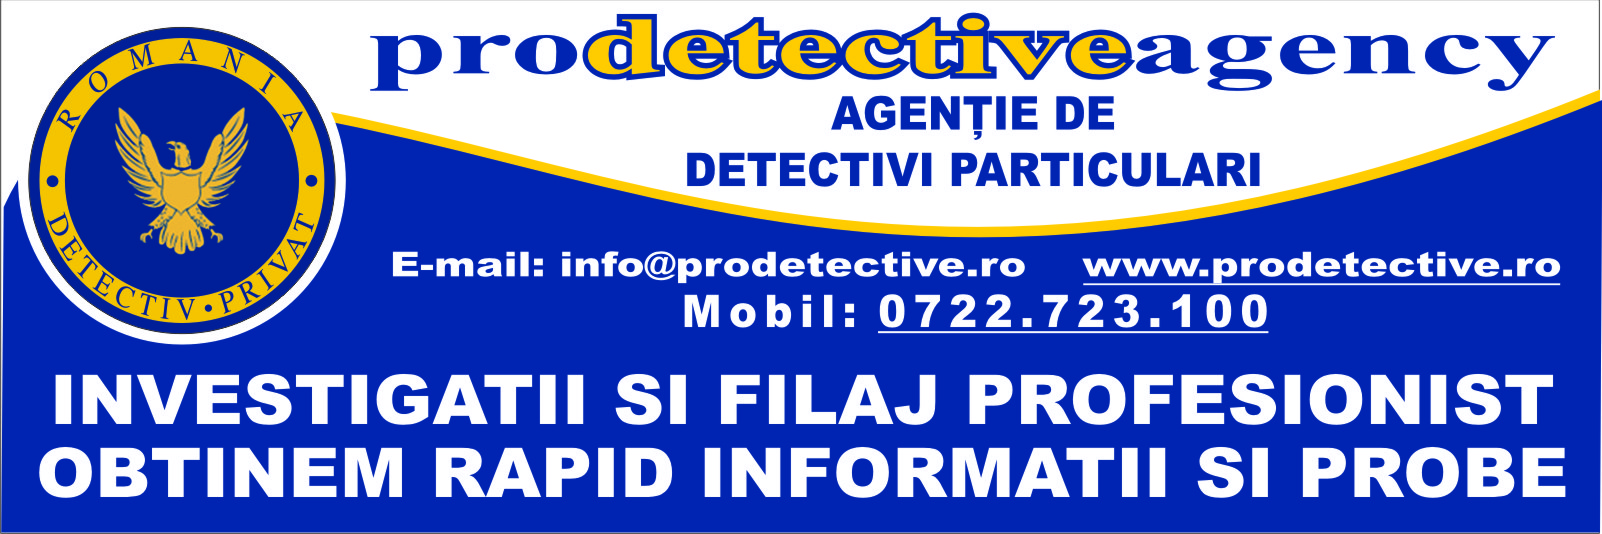 banner new pro detective